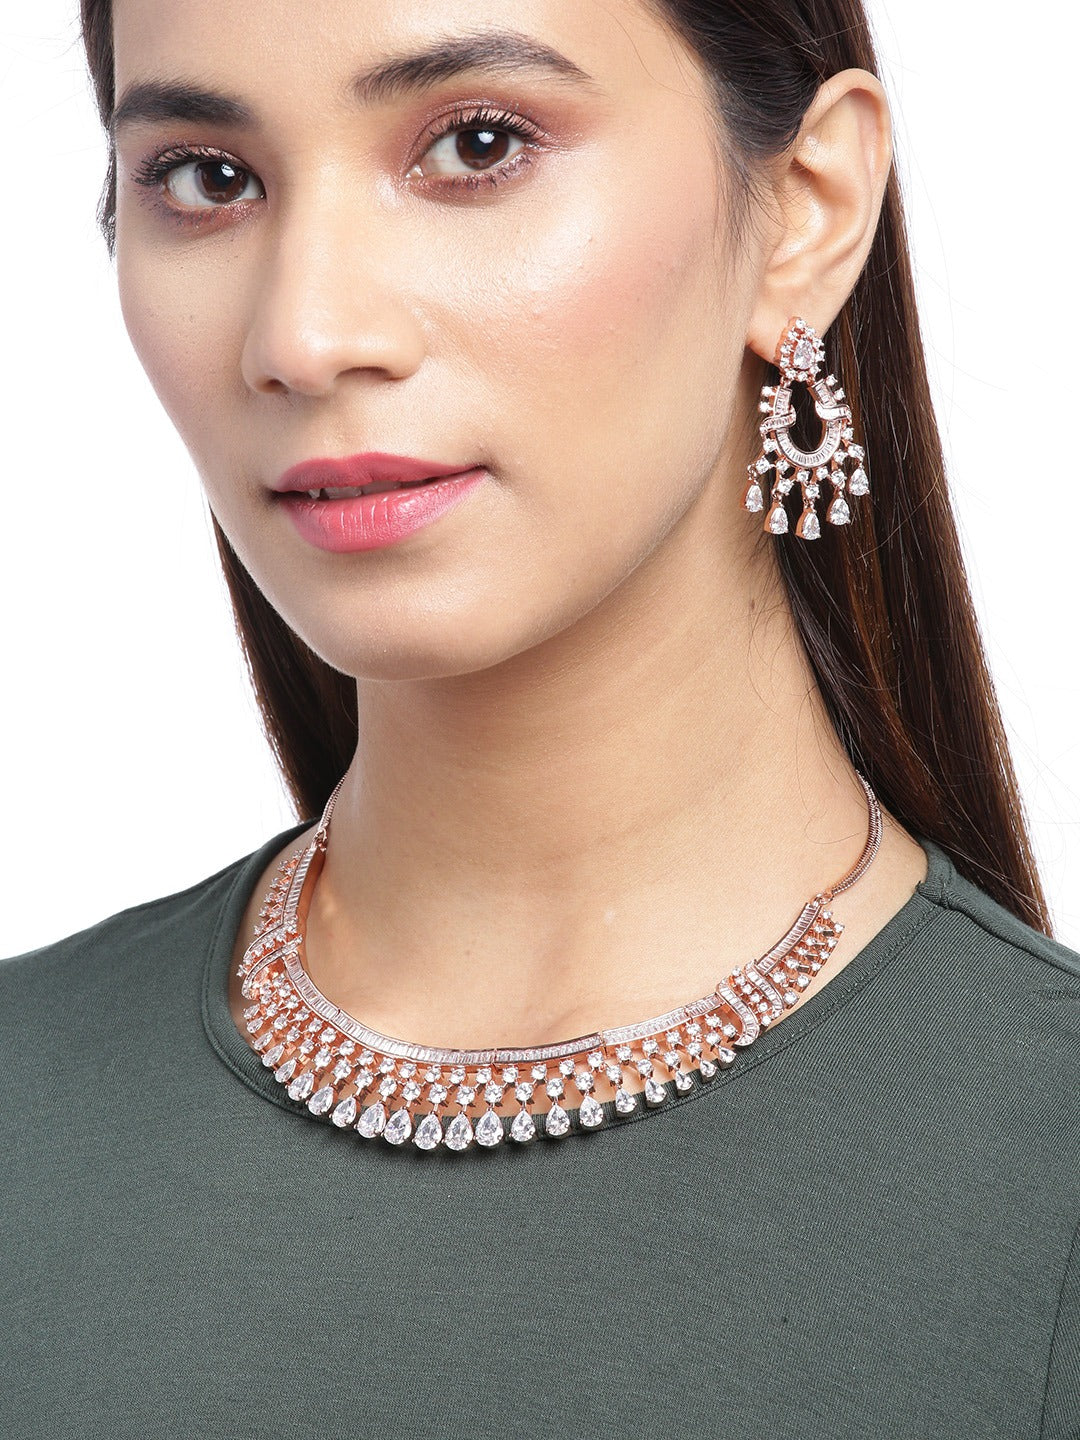 White Jewellery - Buy White Jewellery online in India